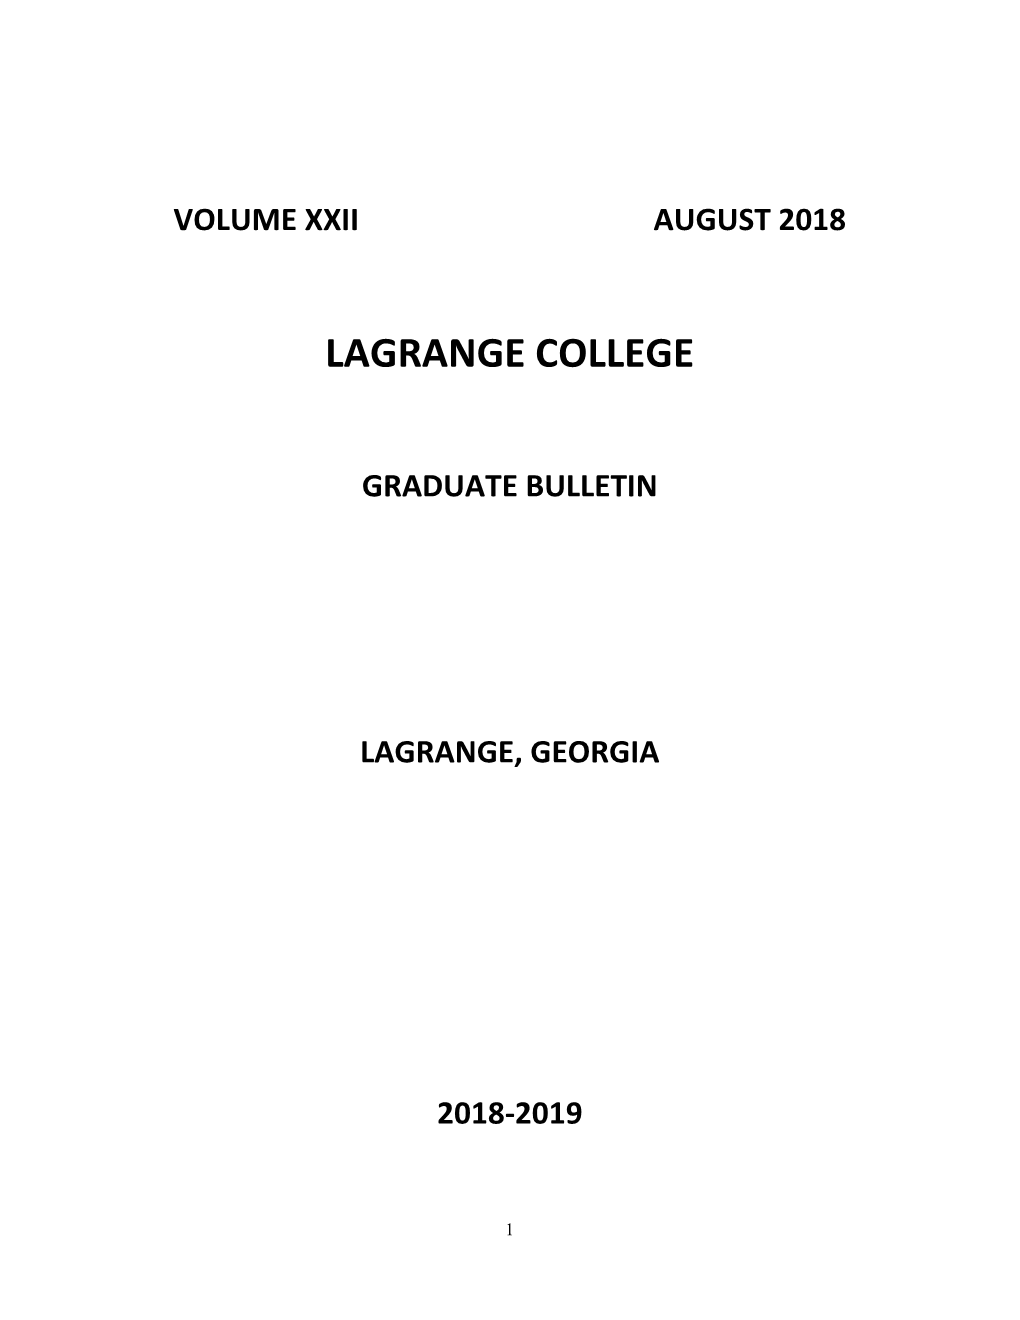 2018-2019 Graduate Bulletin.Pdf